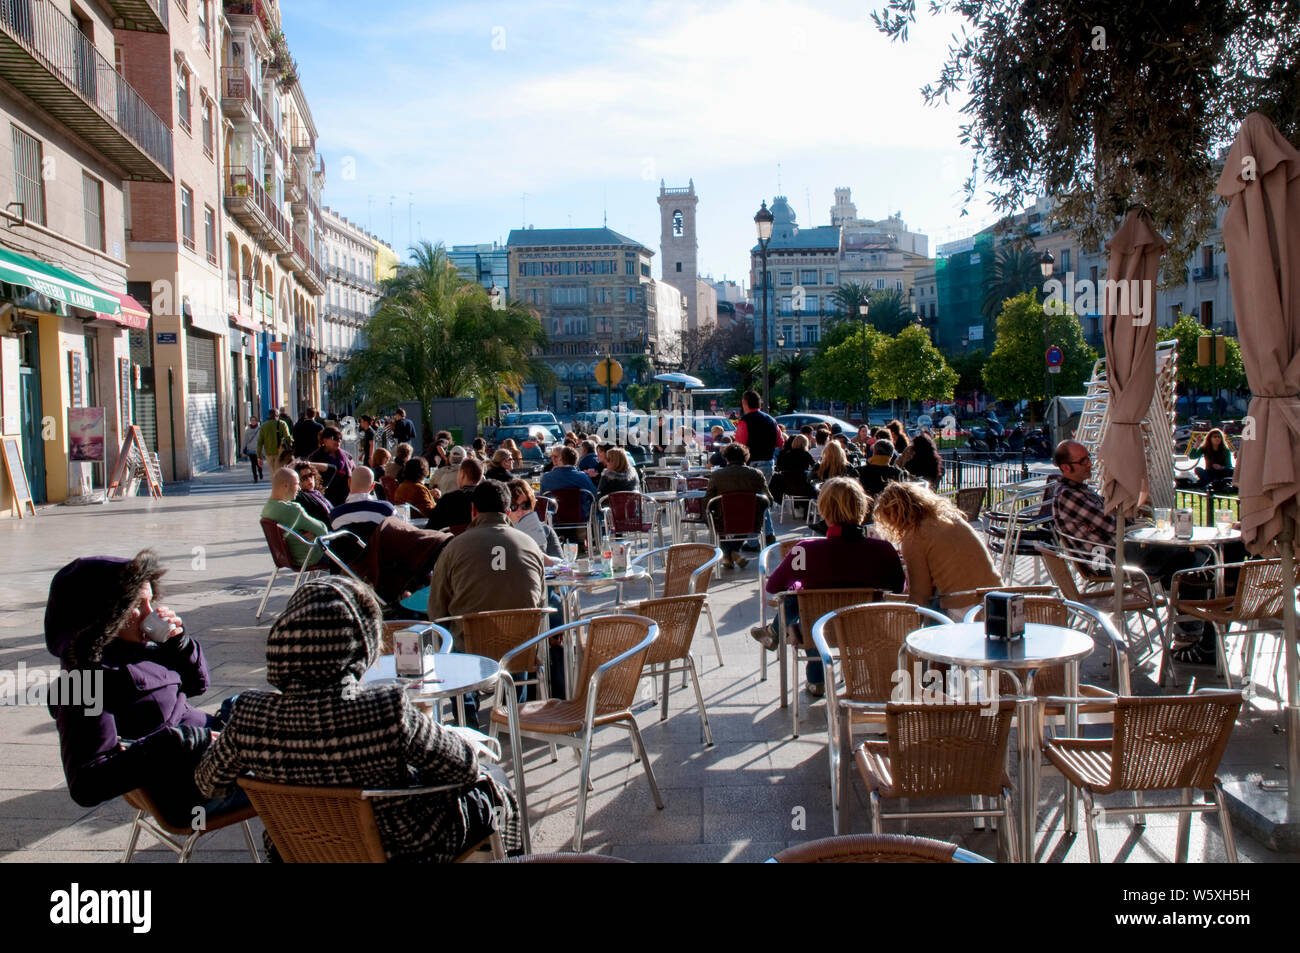 People in a terrace. Plaza de la Reina, Valencia, Spain. Stock Photo